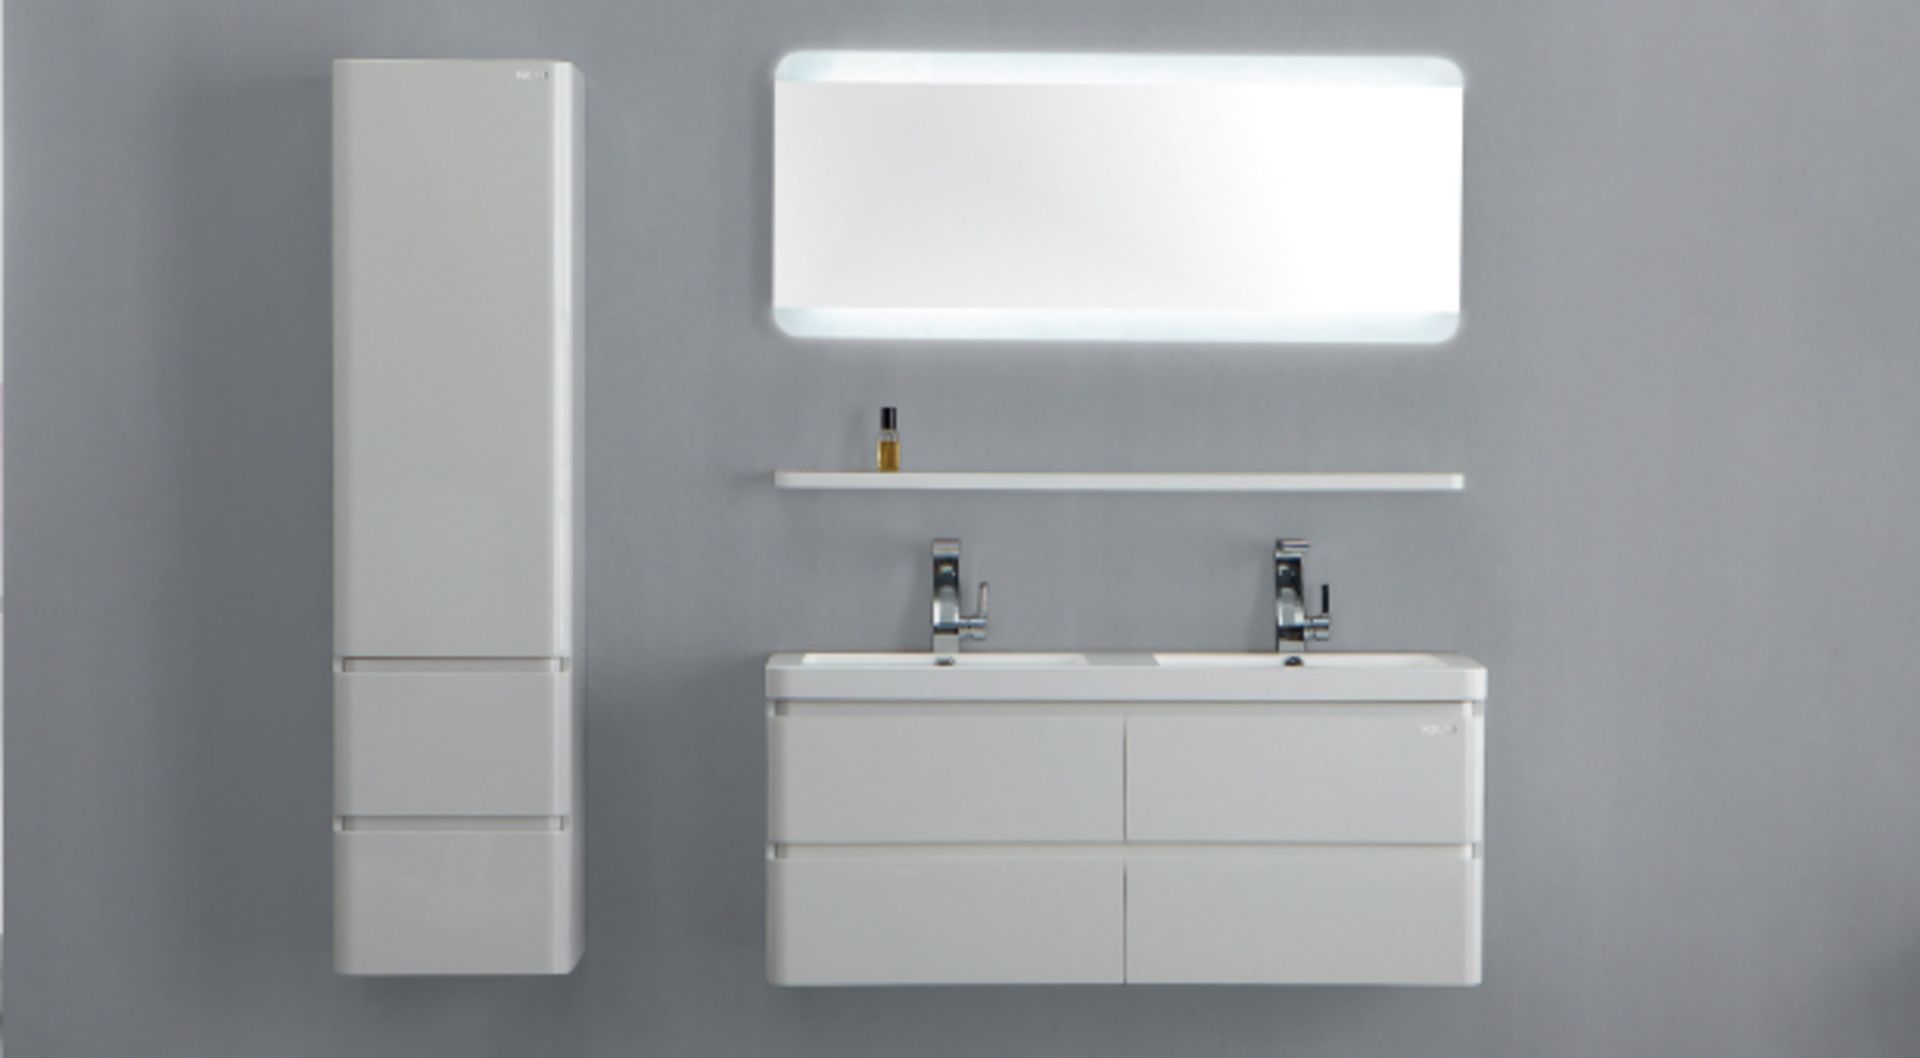 1 x Stylish Bathroom Edge Back-lit Mirror 100 - B Grade Stock